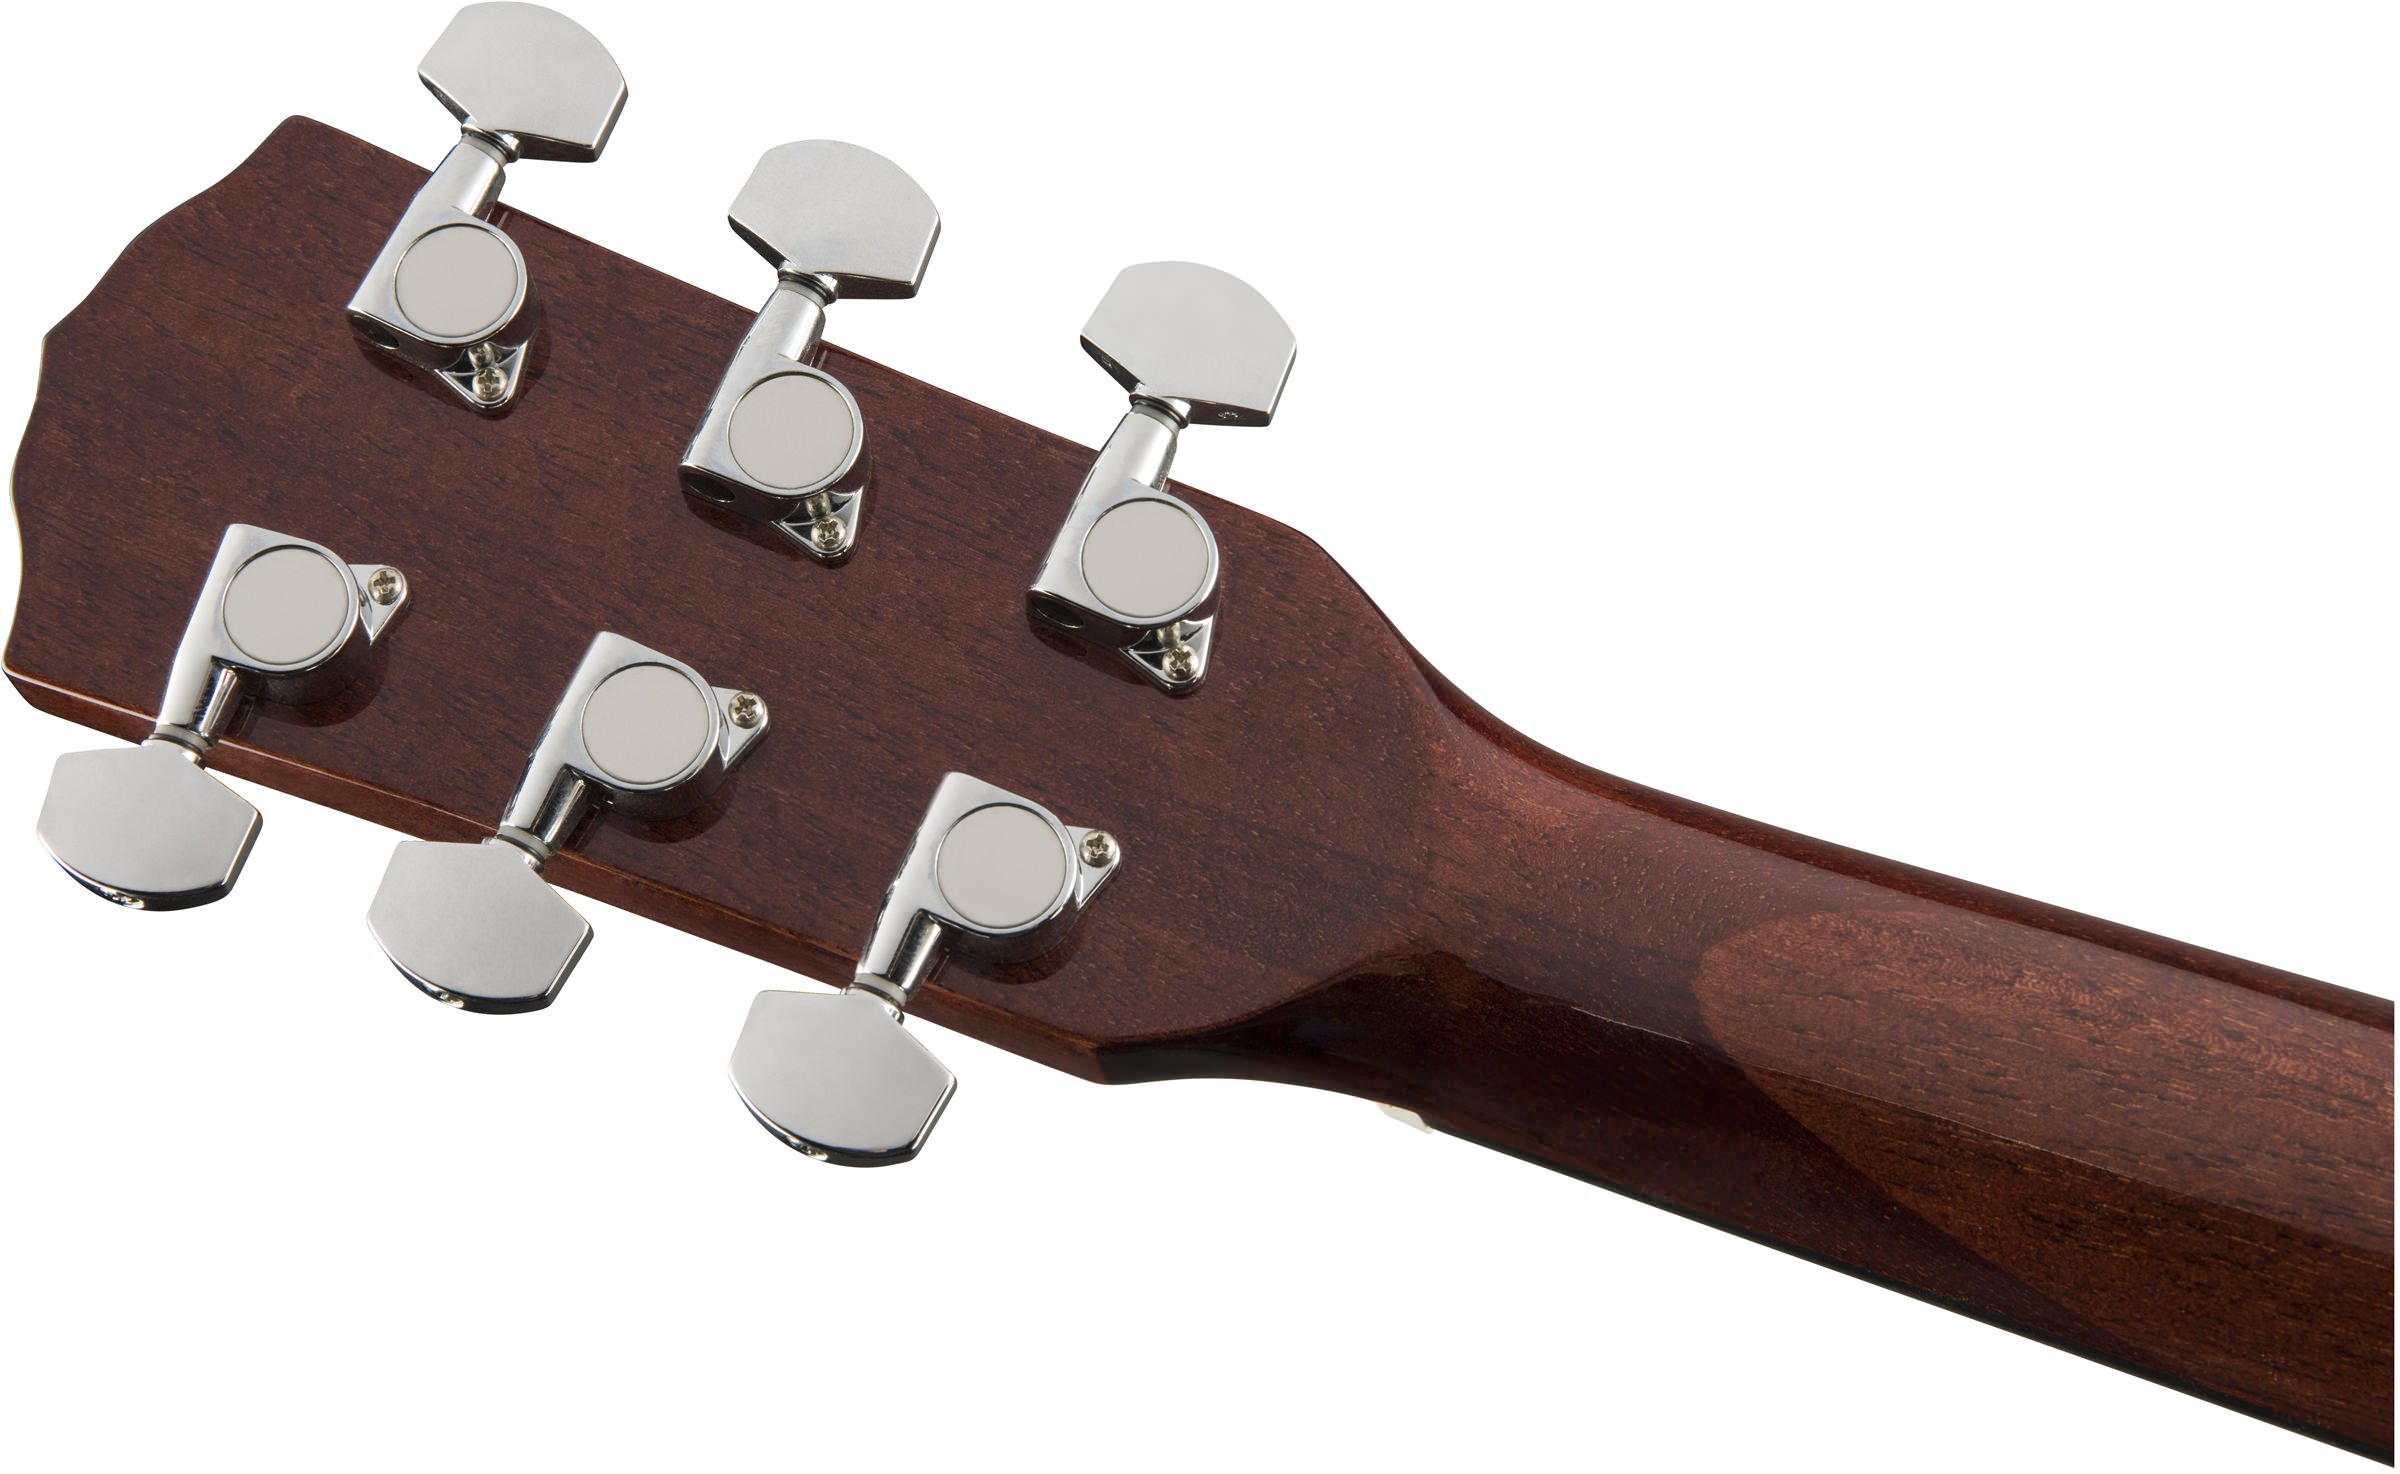 Fender CC-60SCE Natural по цене 44 000 ₽